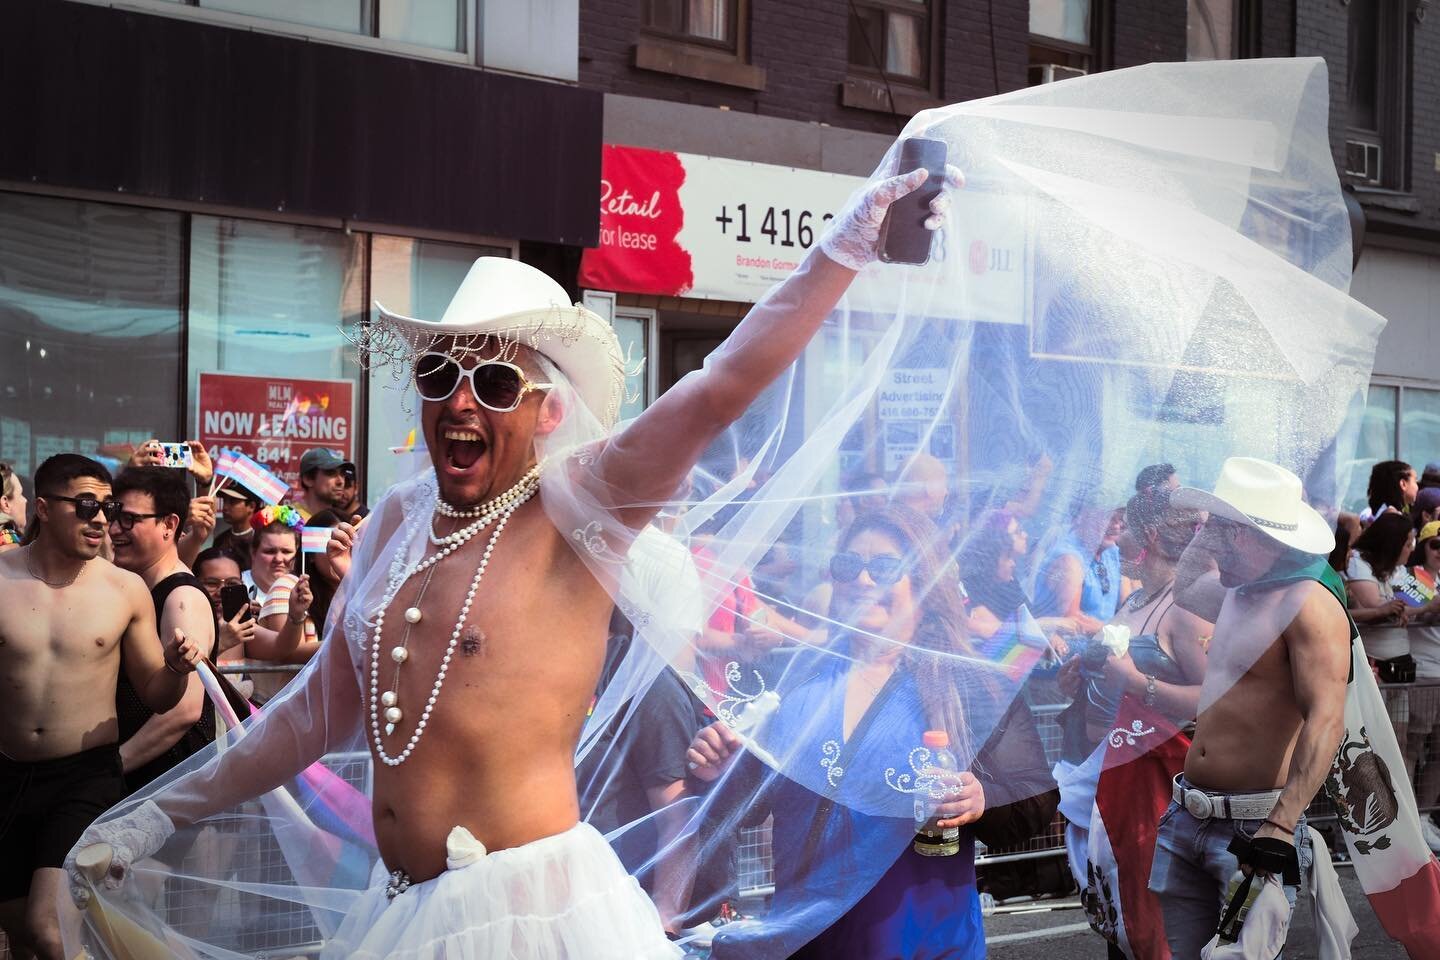 Pride Parade 2023 - Toronto, Canada

#pride #pride🌈 #pridemonth #gaypride #pride2023 #freedom #lgbt #lgbtq #lgbtq🌈 #streetphotography #shotonfujifilm #fujifilm #fujifilm_xseries #picsoftheday #toronto #canada #torontolife #torontophotography #equal